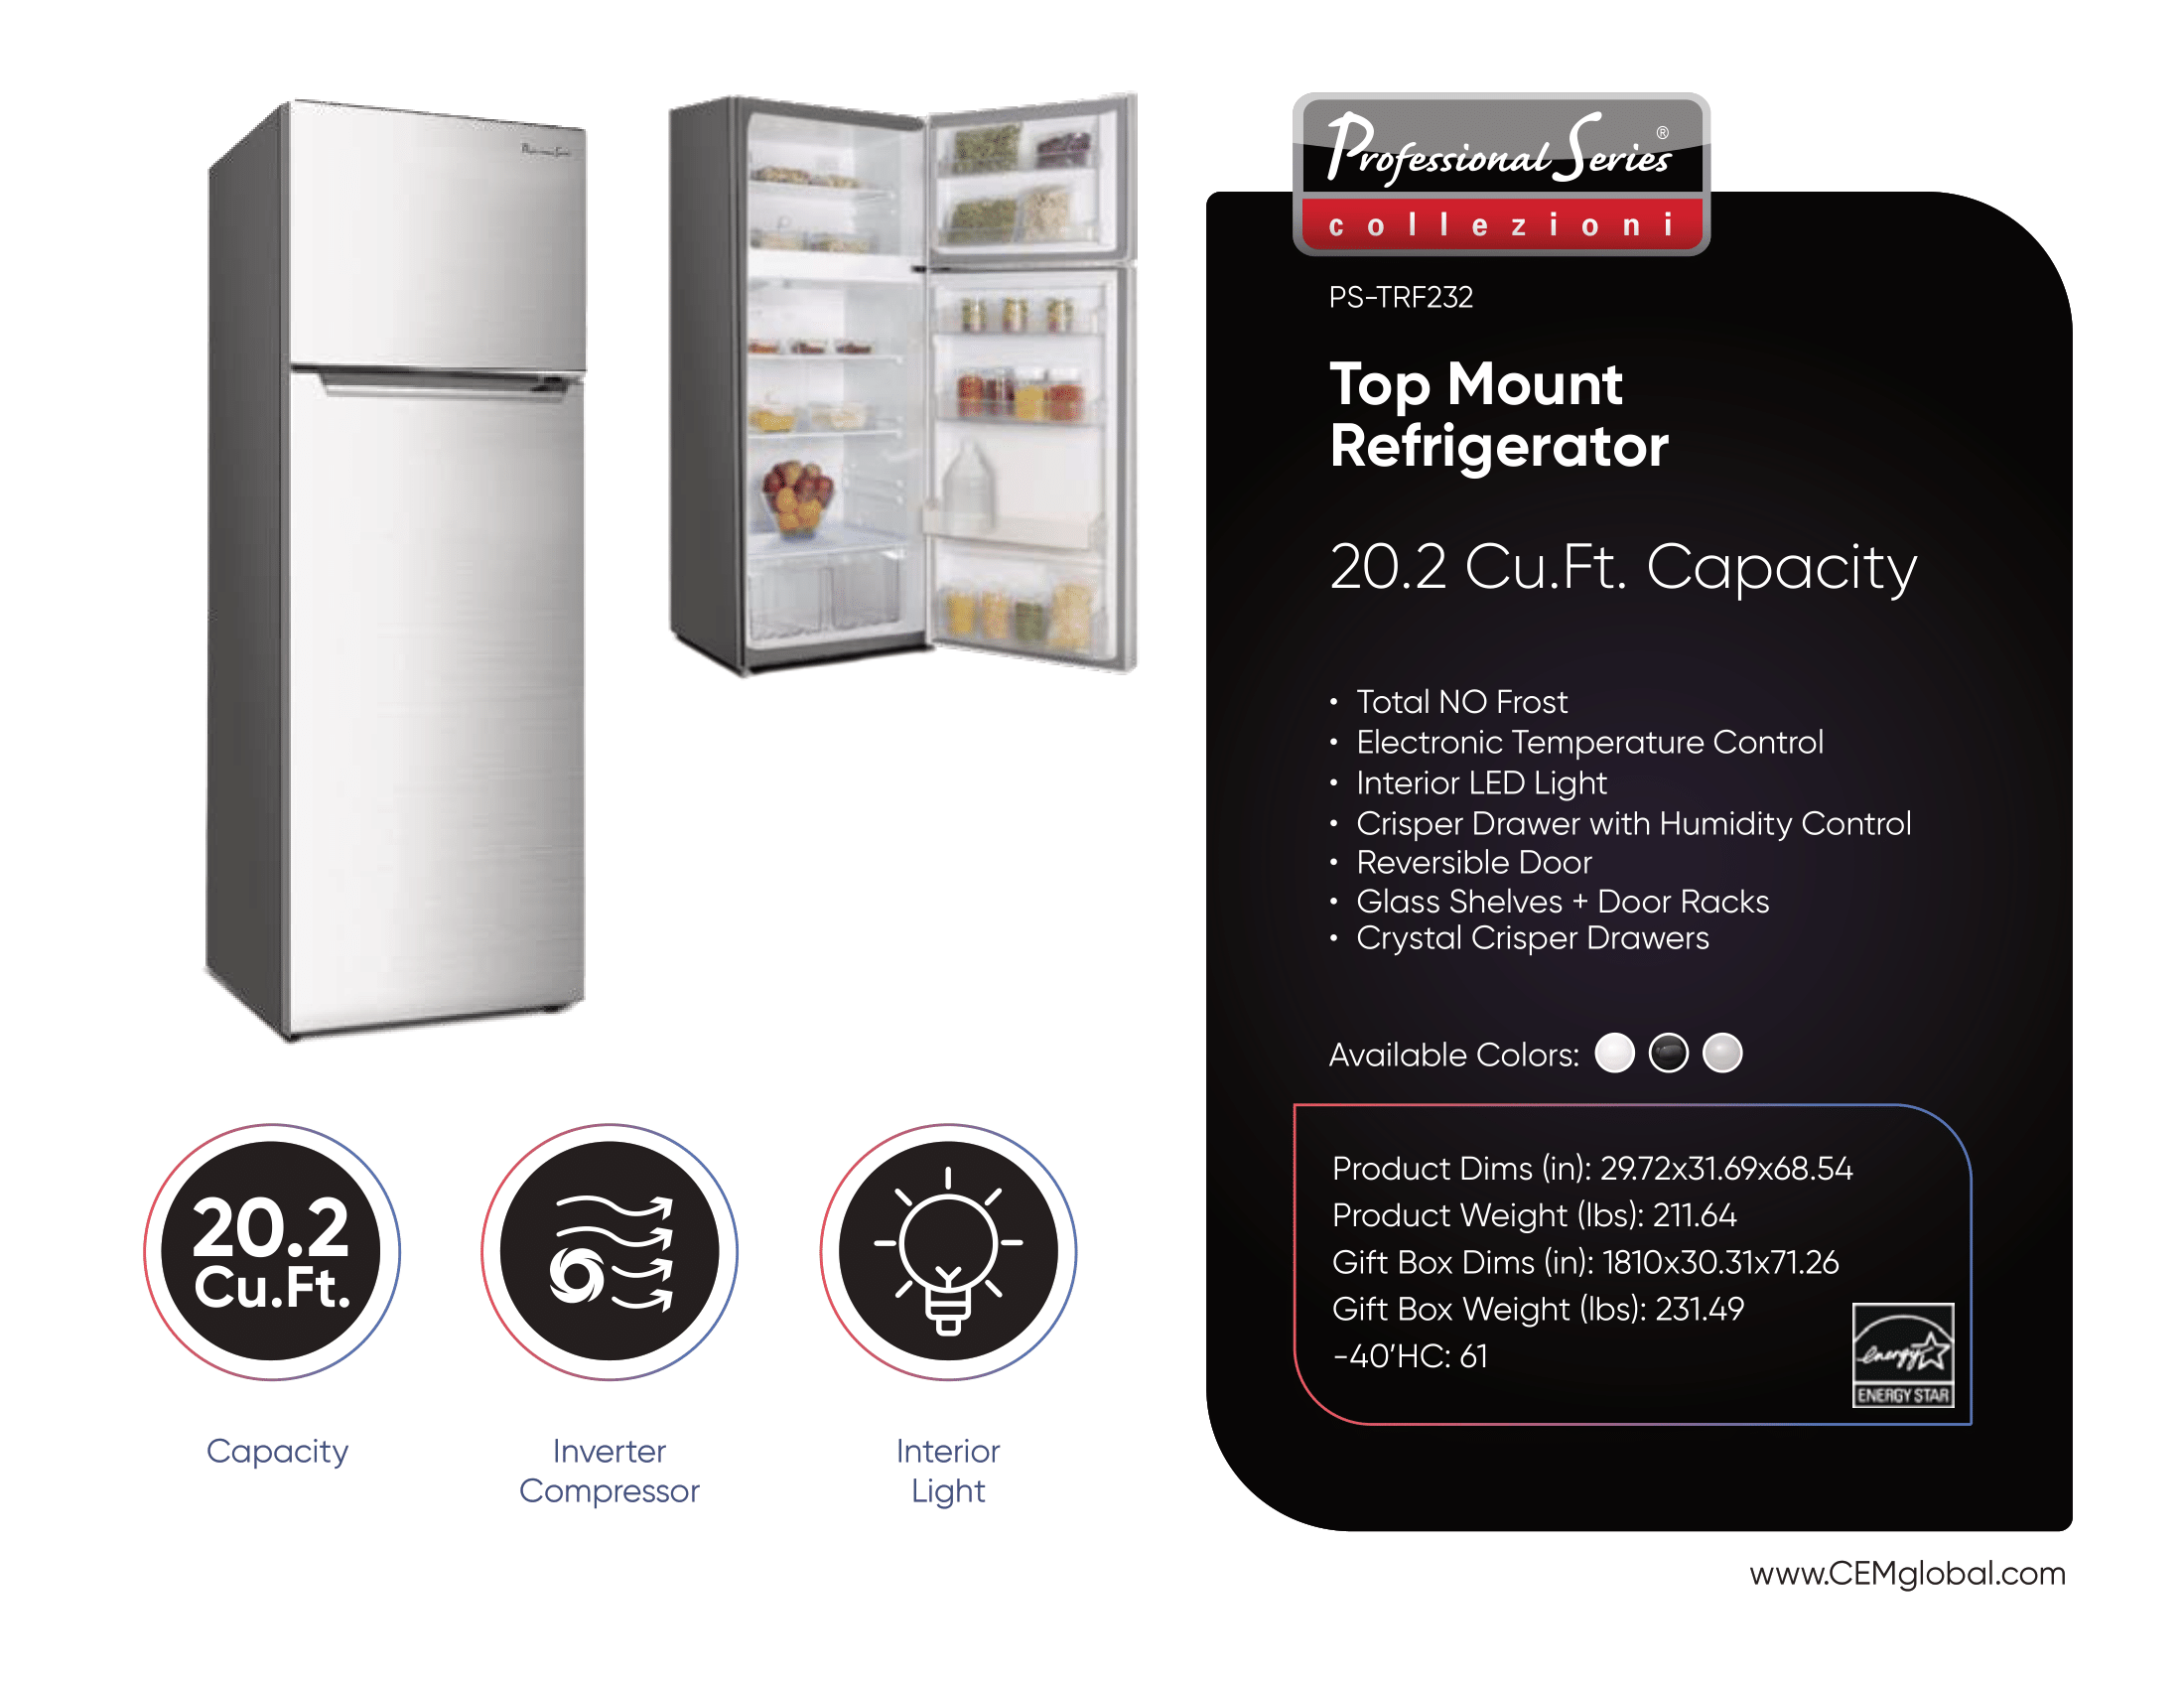 Top Mount Refrigerator 20.2 Cu.Ft.